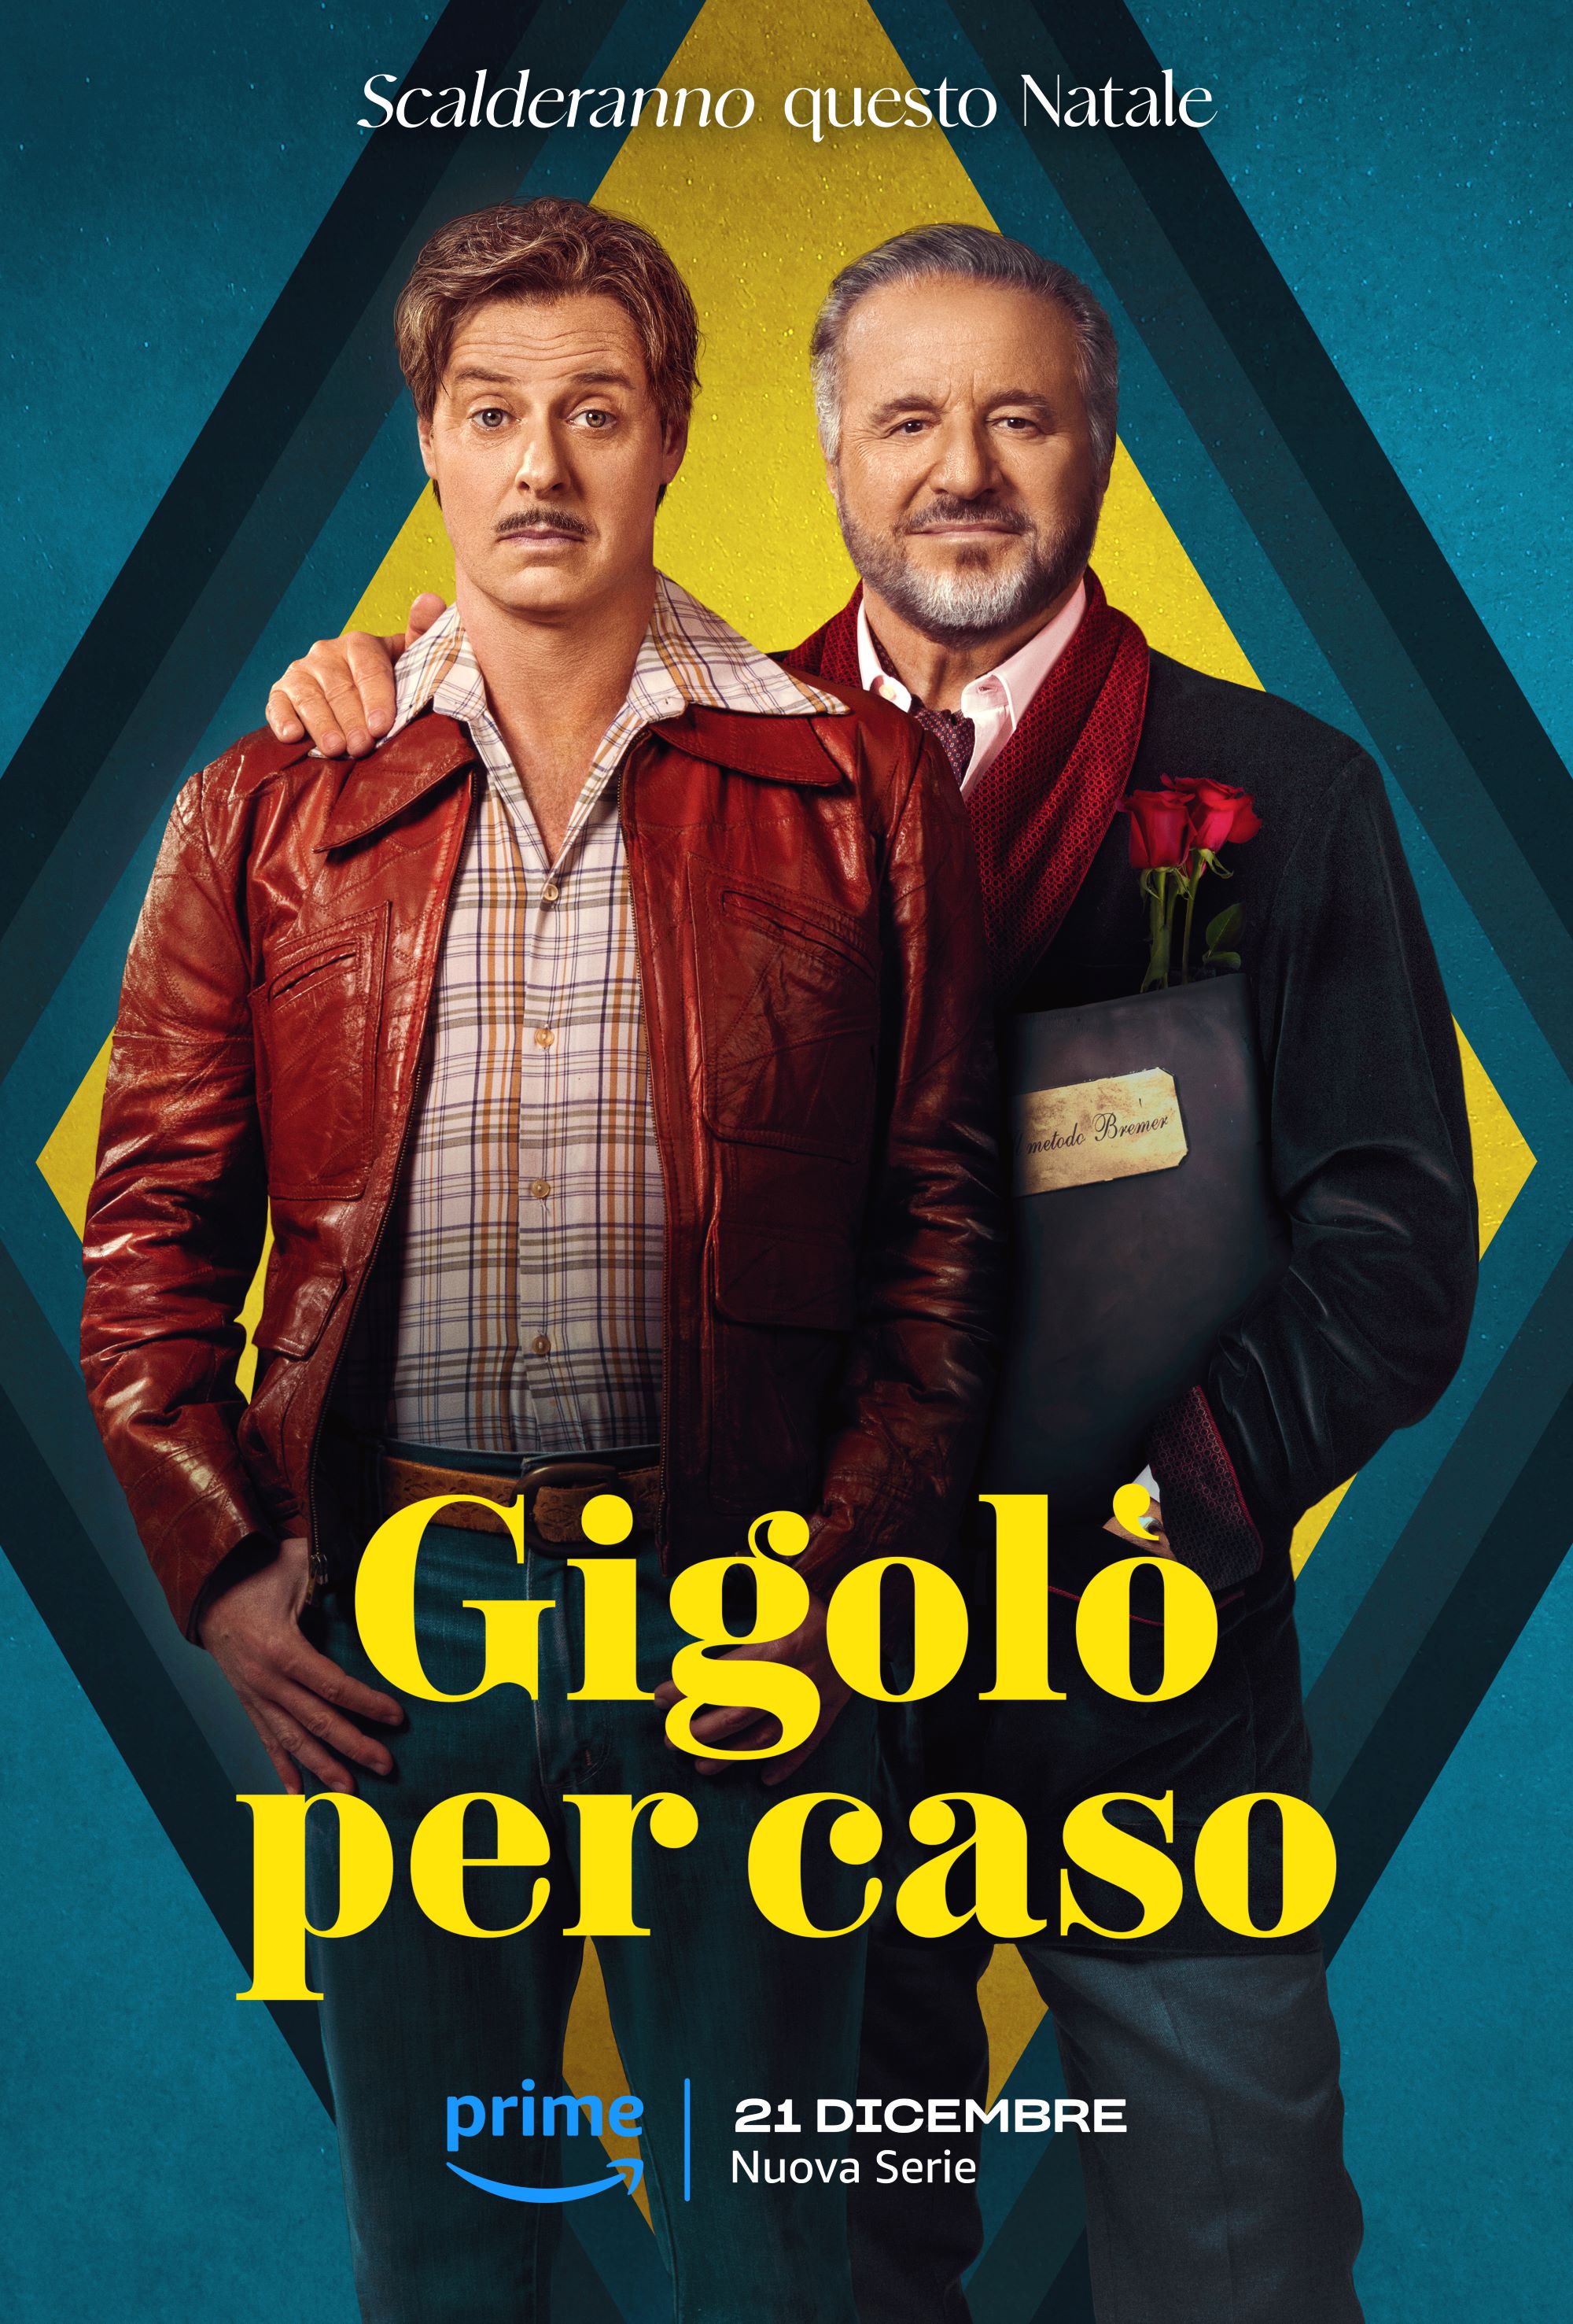 TV ratings for Gigolò Per Caso in the United Kingdom. Amazon Prime Video TV series